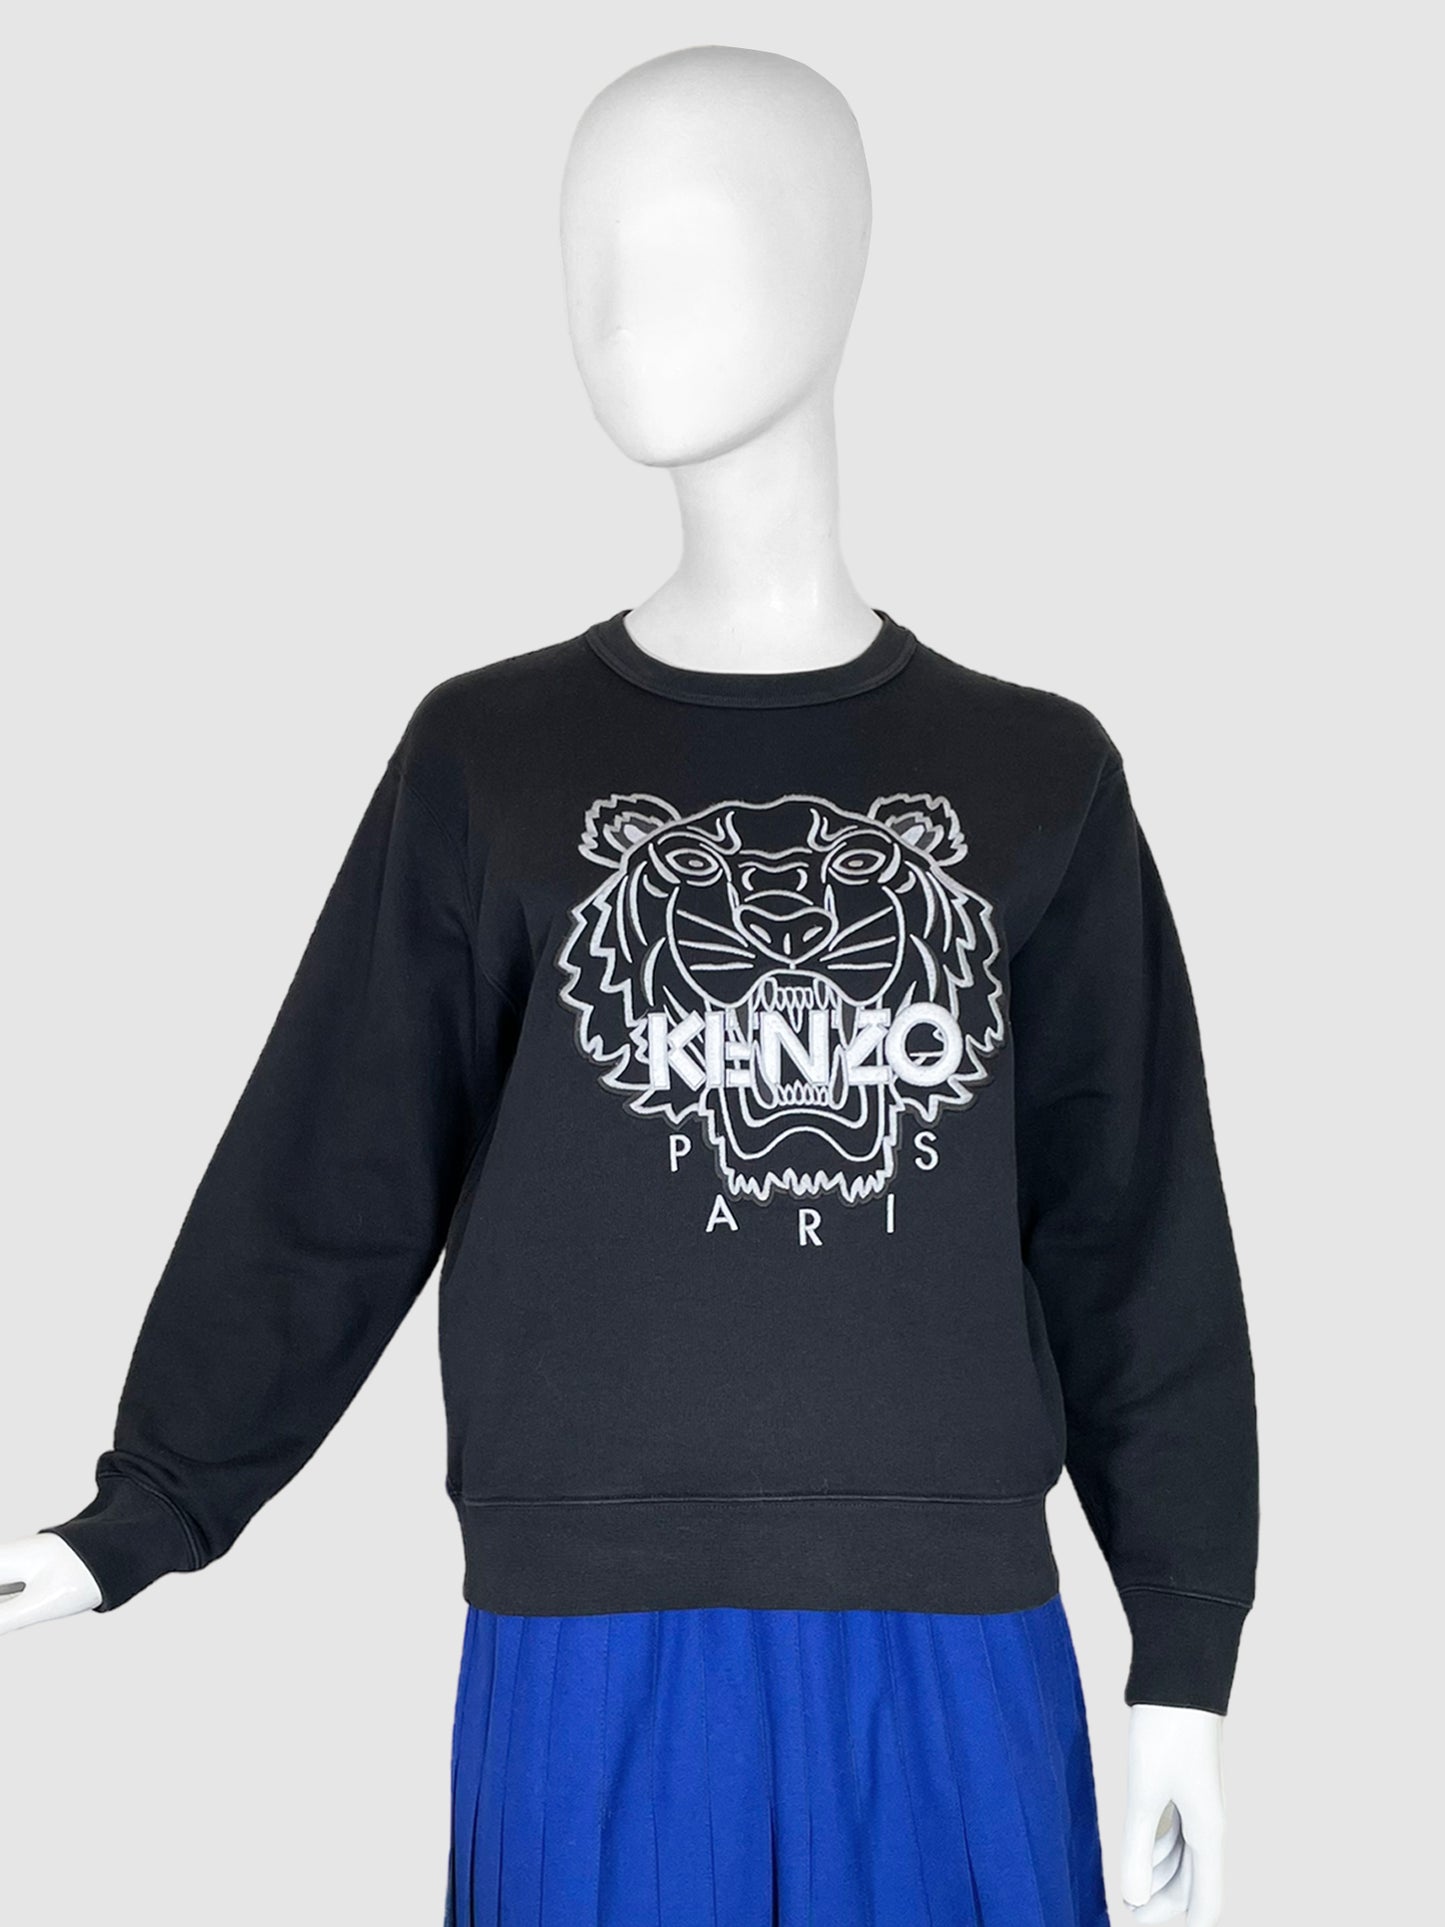 Kenzo Crewneck Sweater - Size M